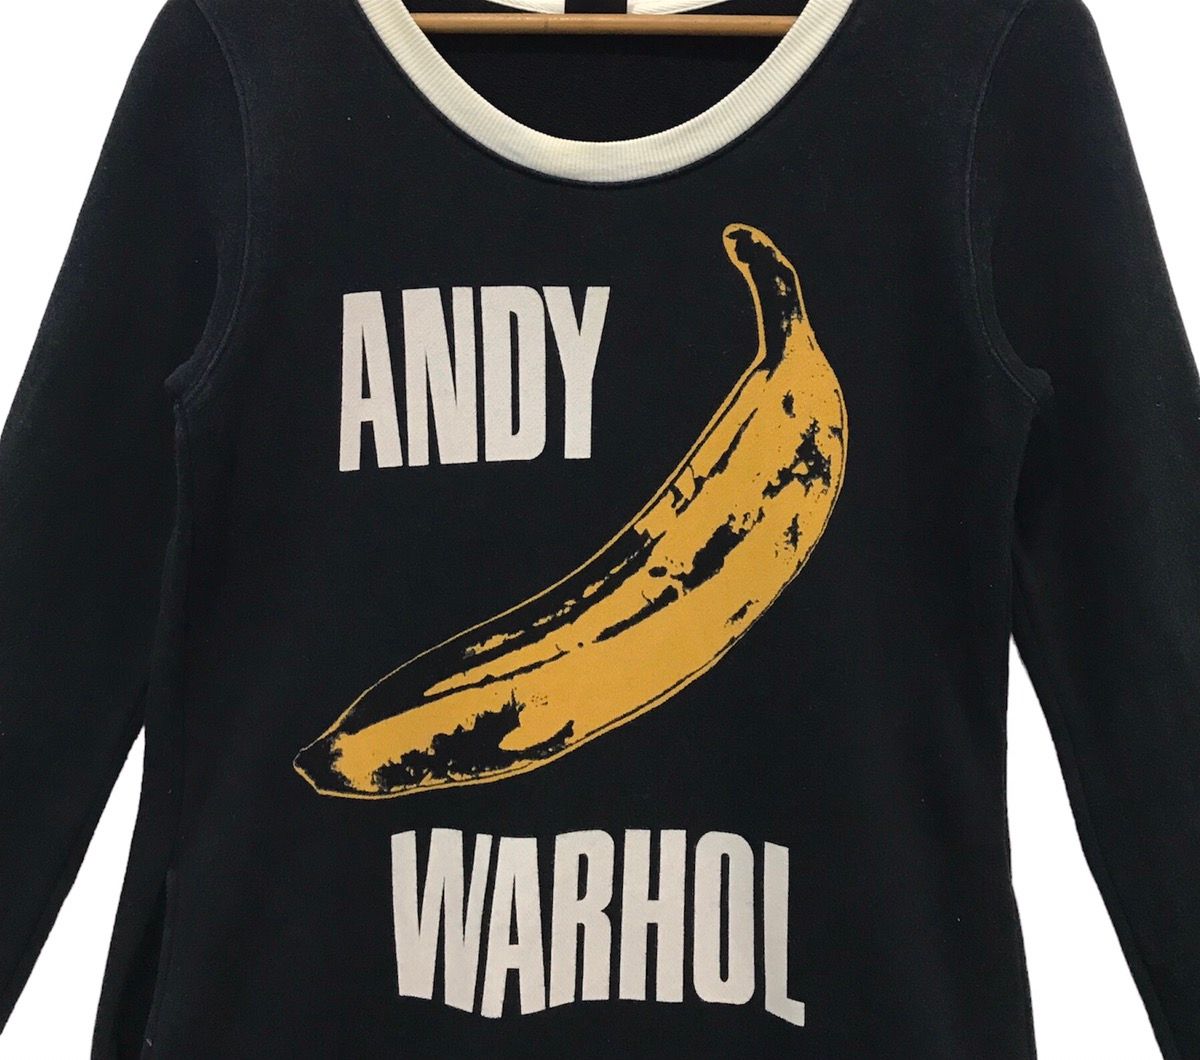 Andy Warhol Andy Warhol Velvet Underground Ladies Sweatshirt.. S62 Size M / US 6-8 / IT 42-44 - 2 Preview